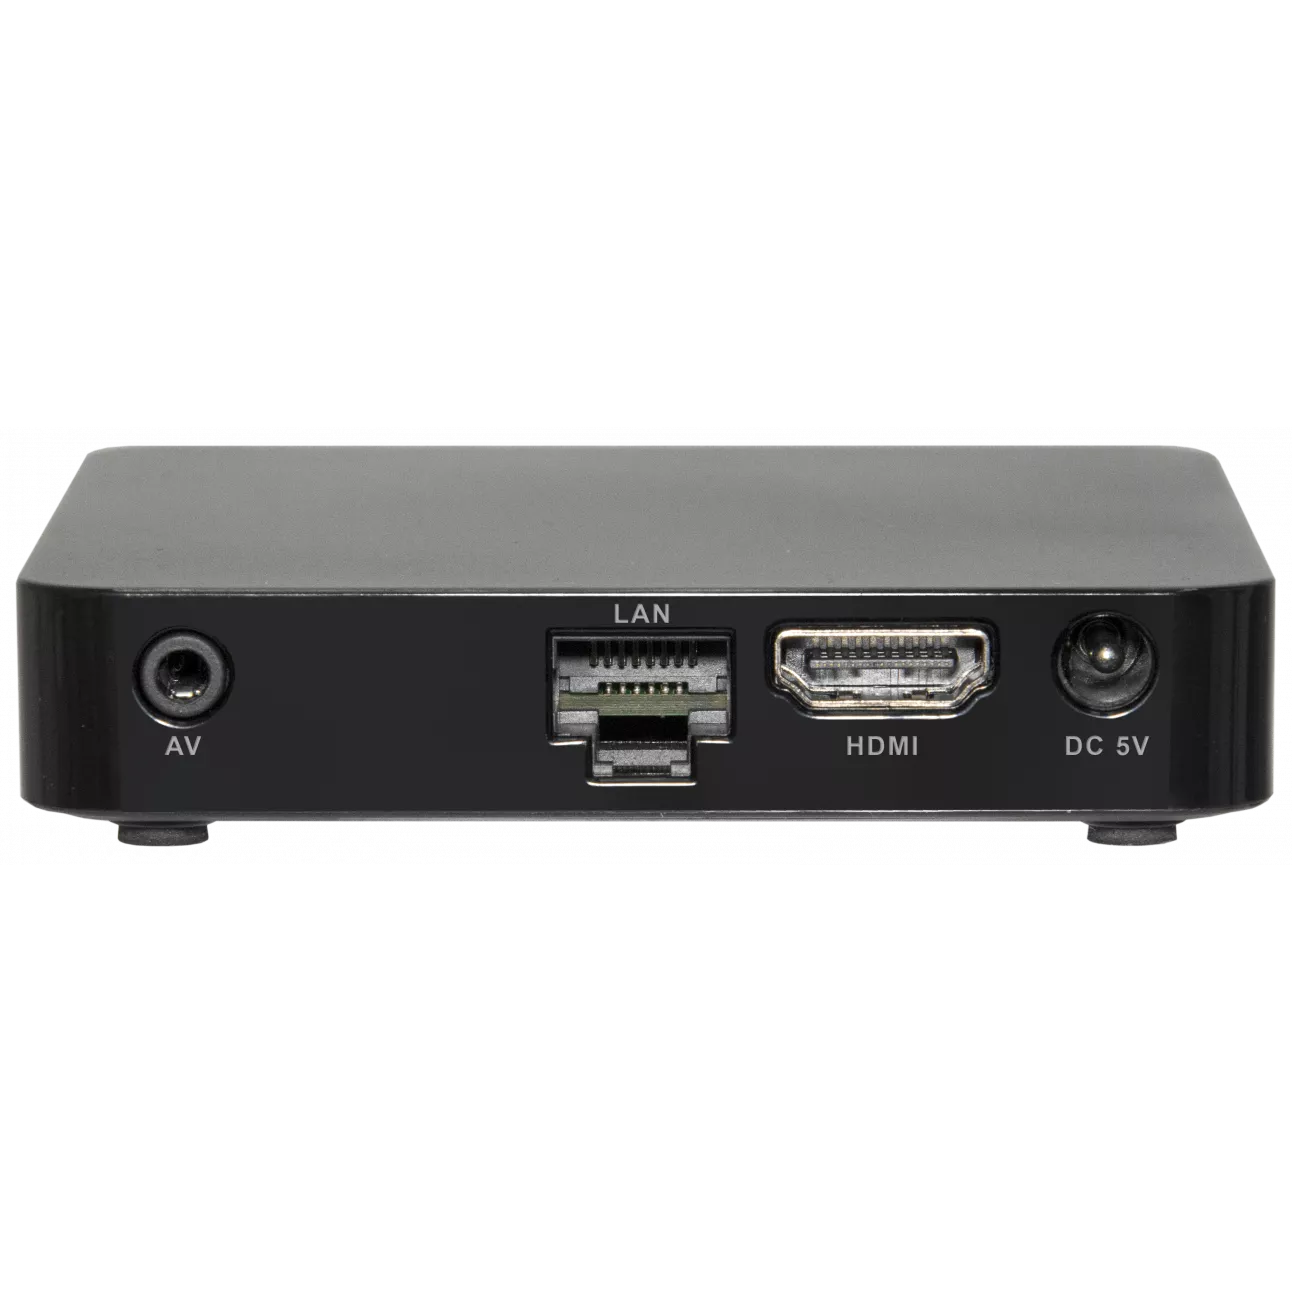 Приставка телевизионная 4K IPTV Vermax UHD300 б/у